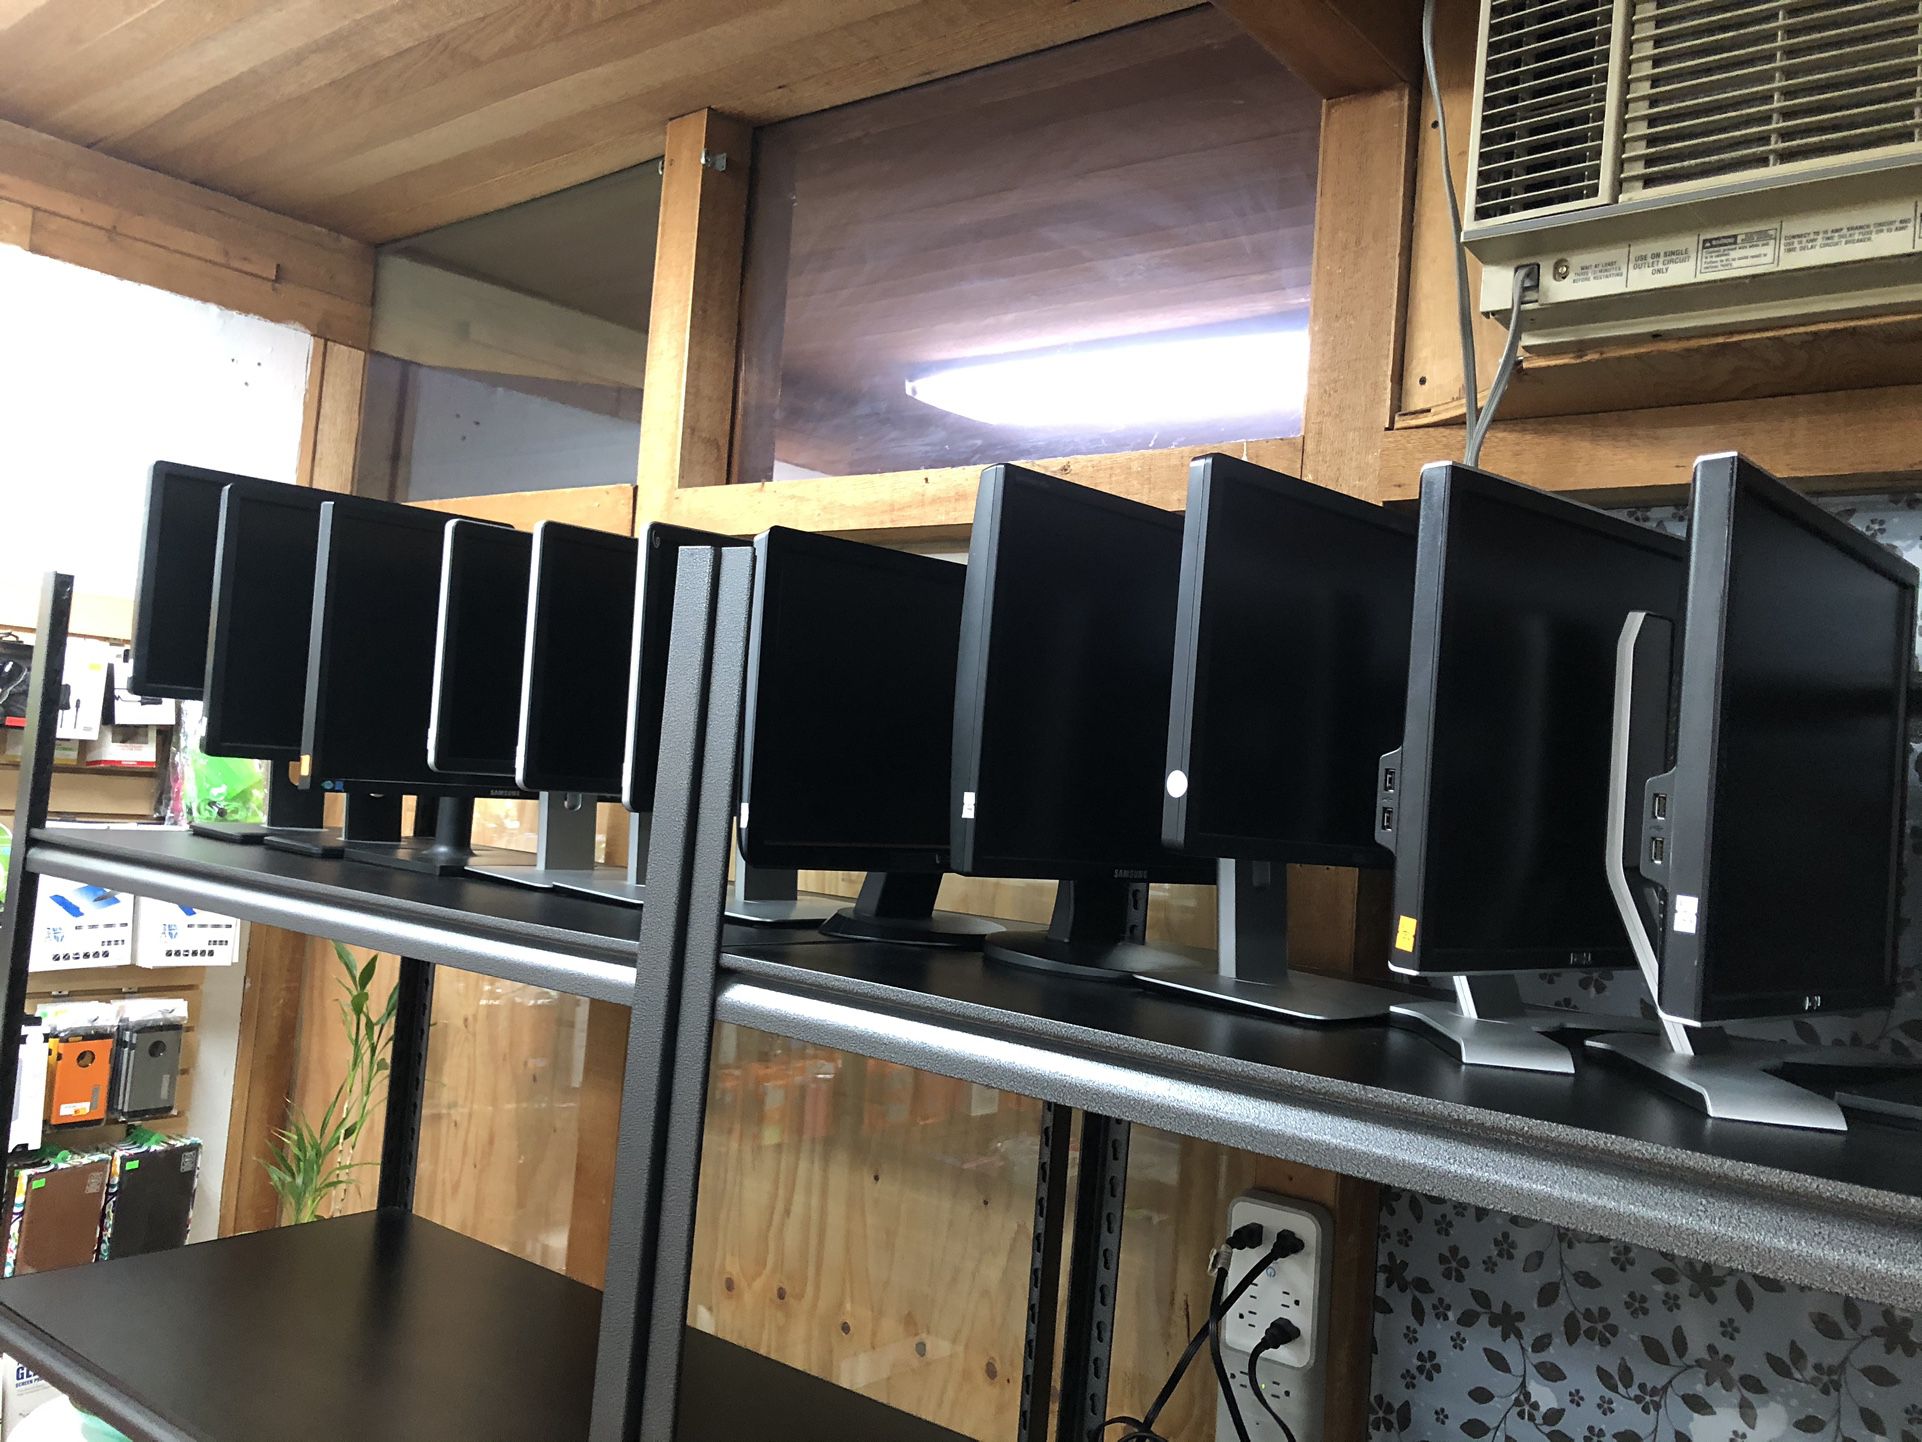 19-22 inch monitors